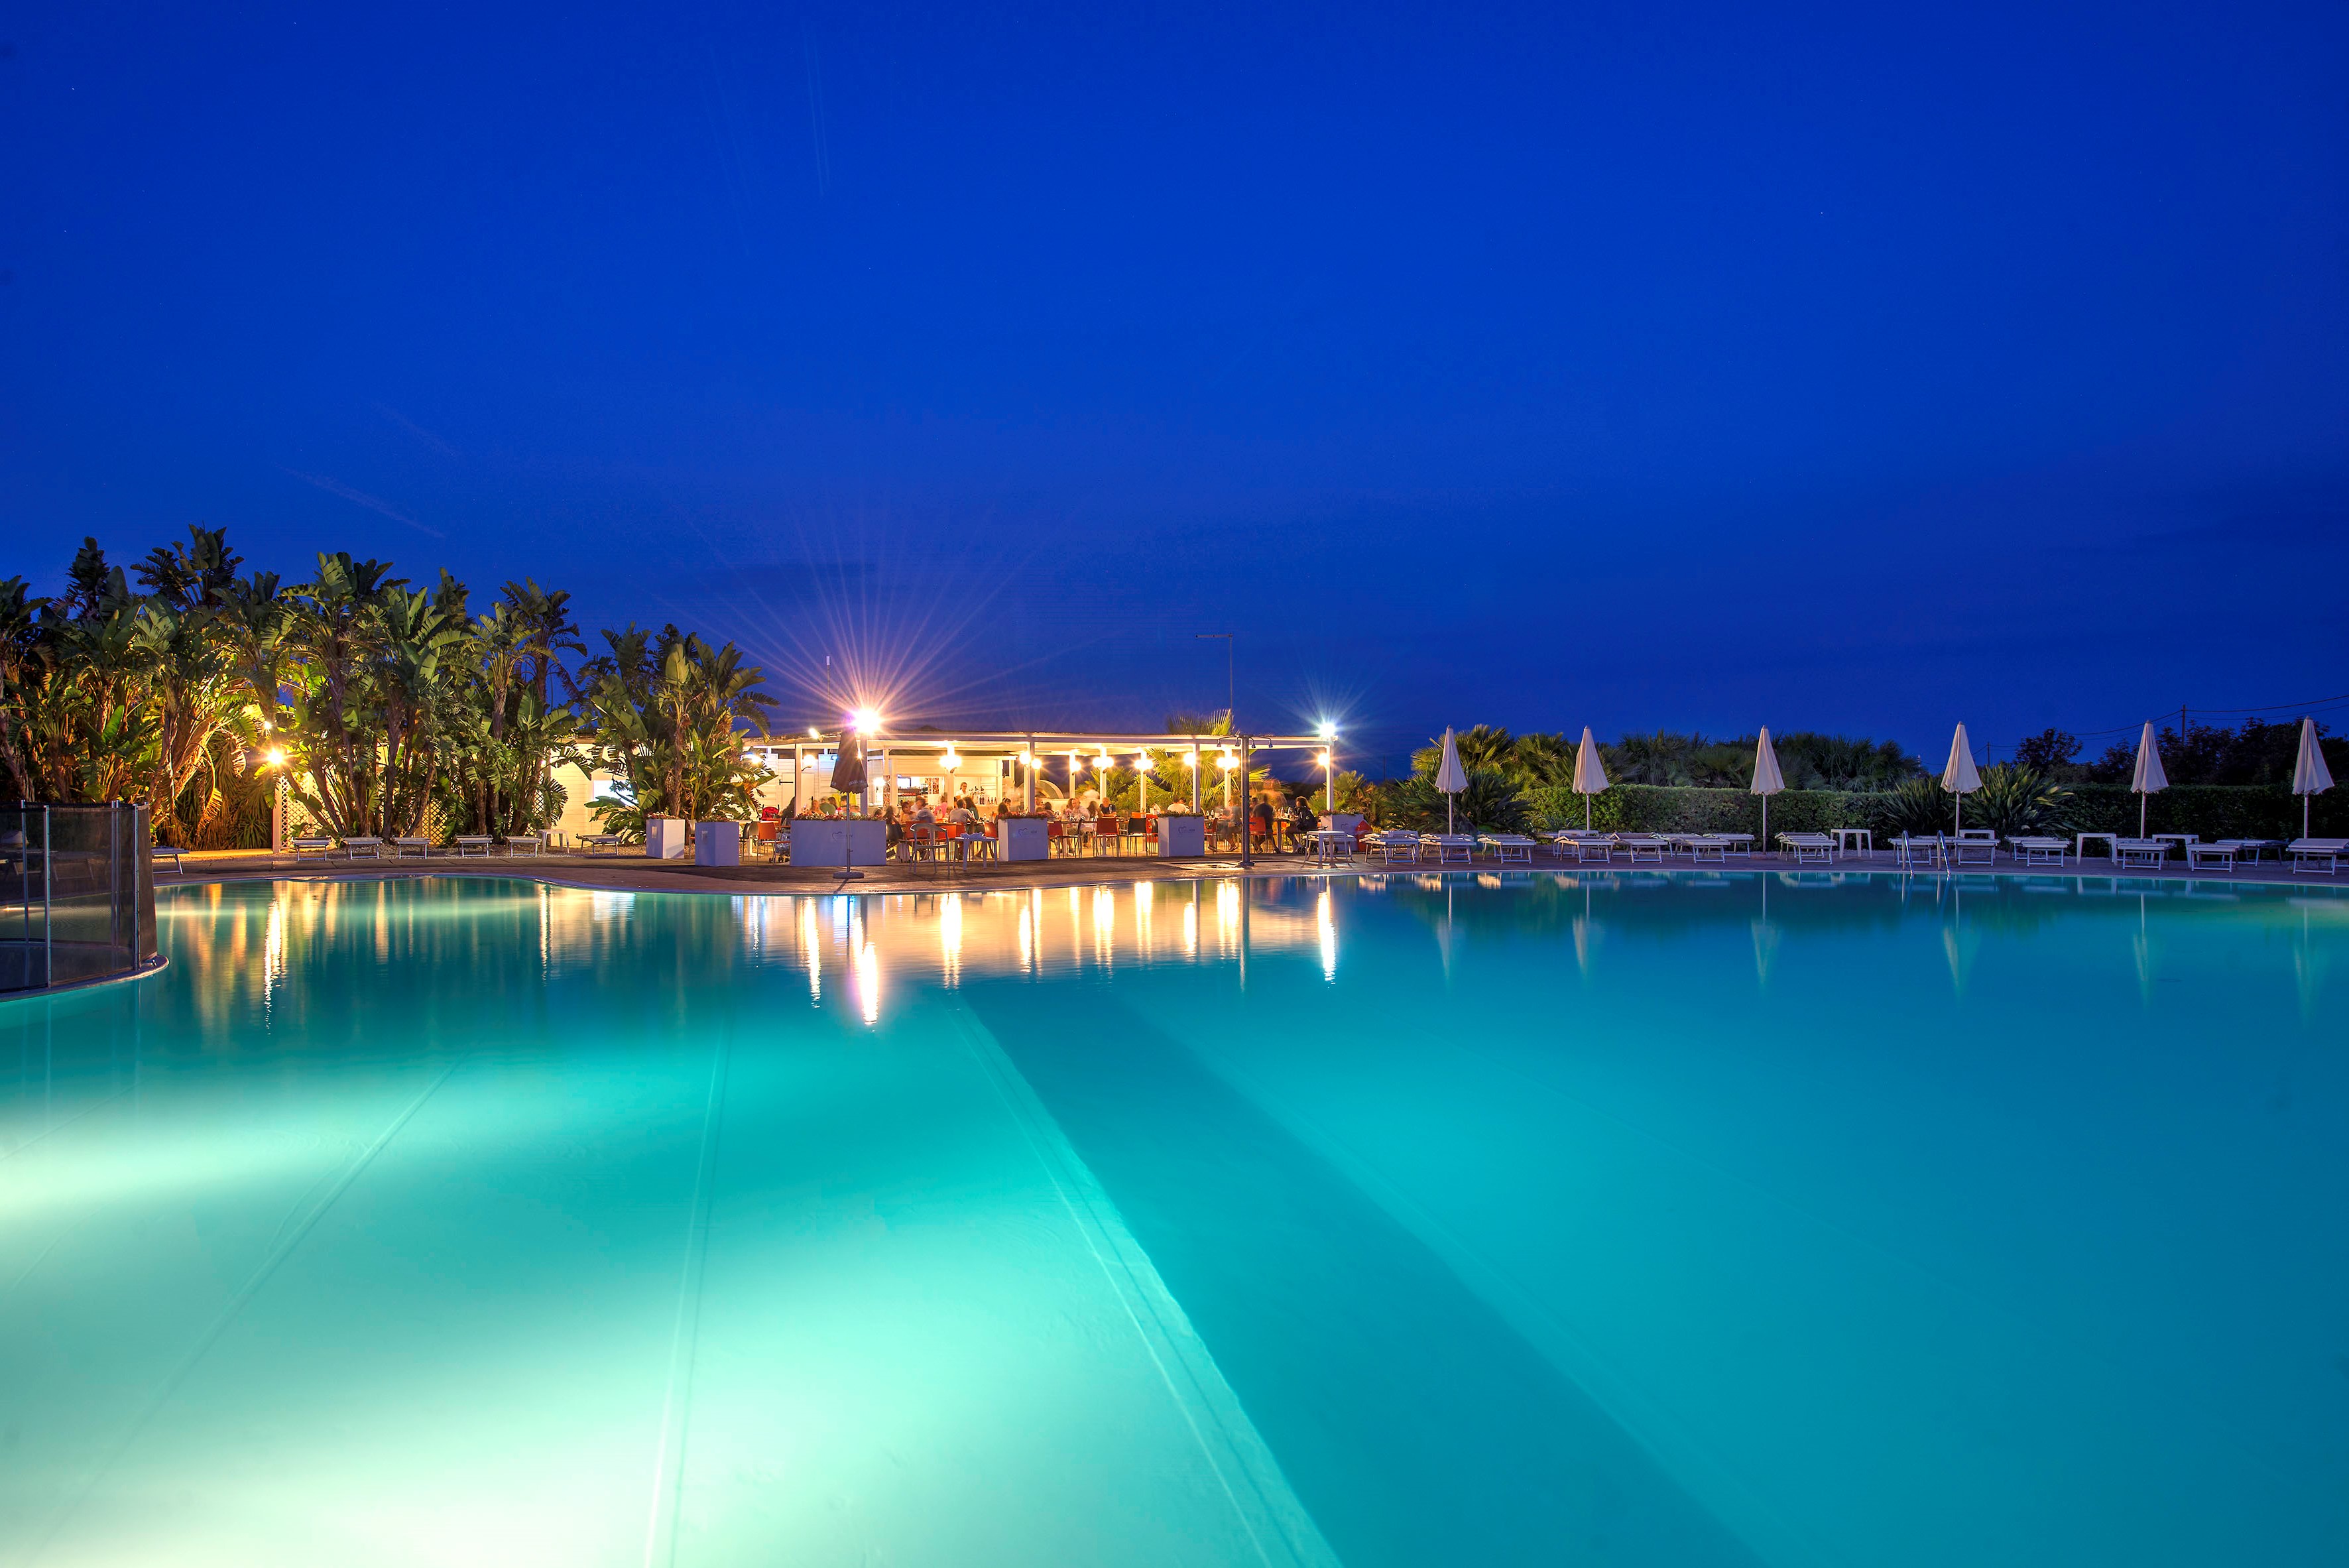 Event Beach Resort Sicily - Pool